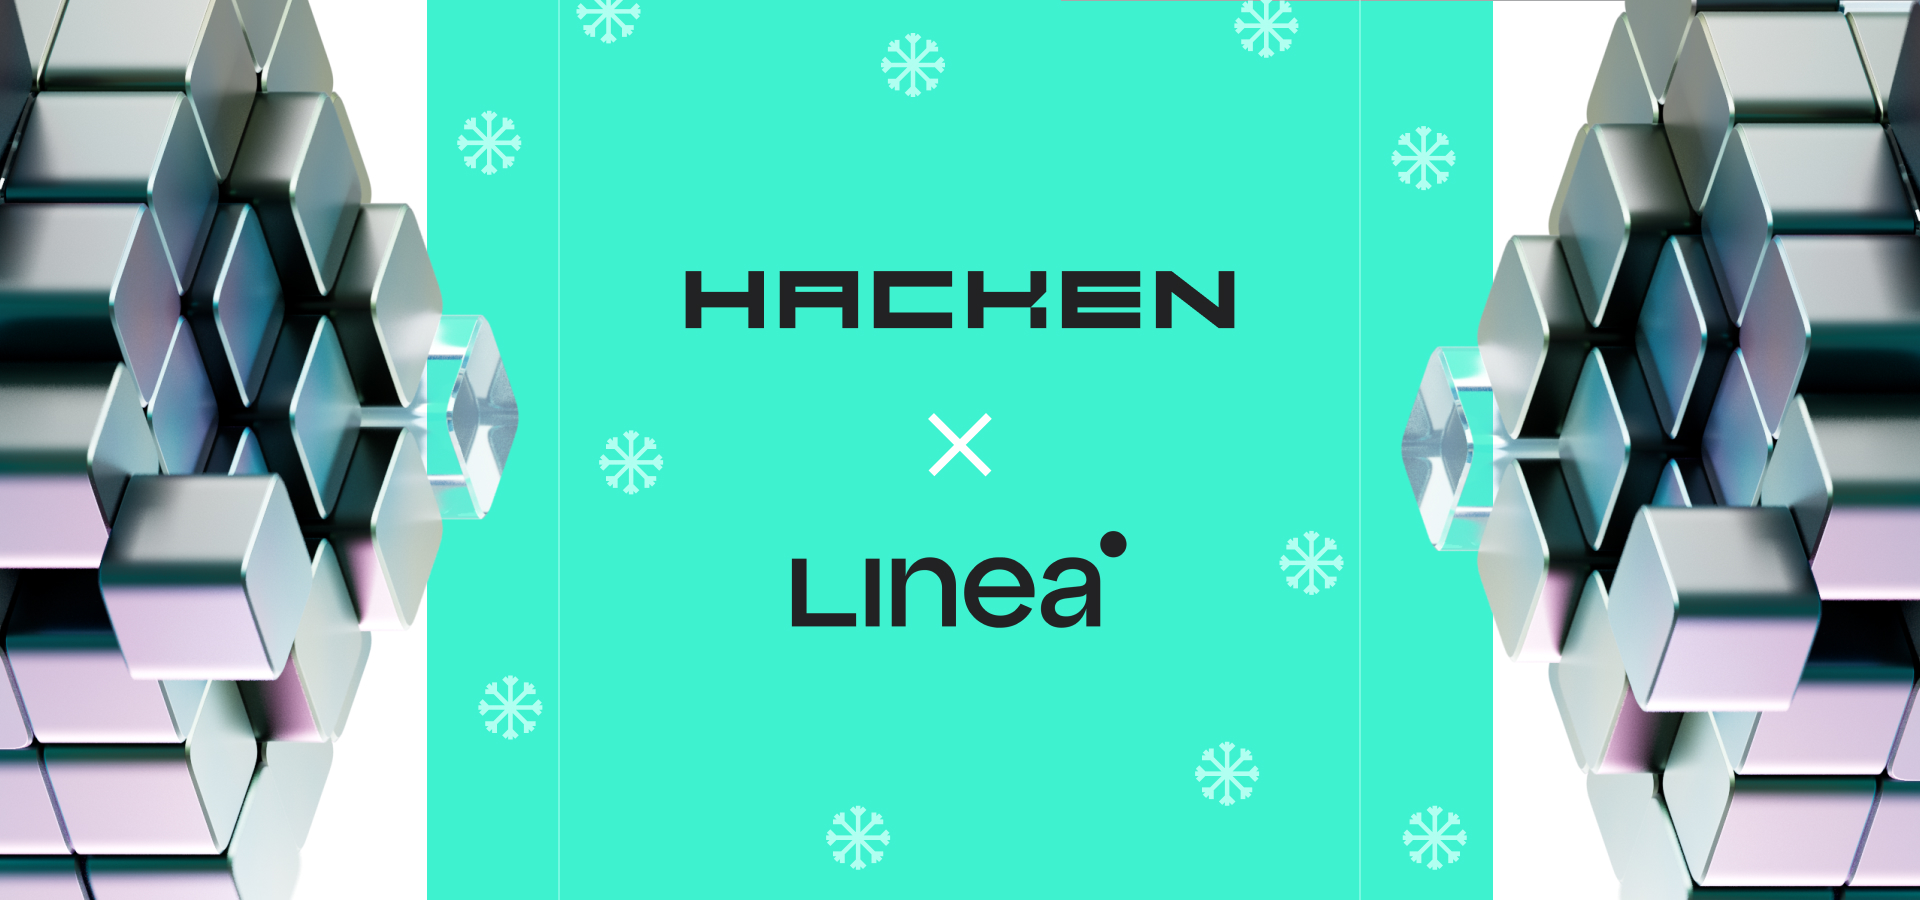 Hacken and Linea